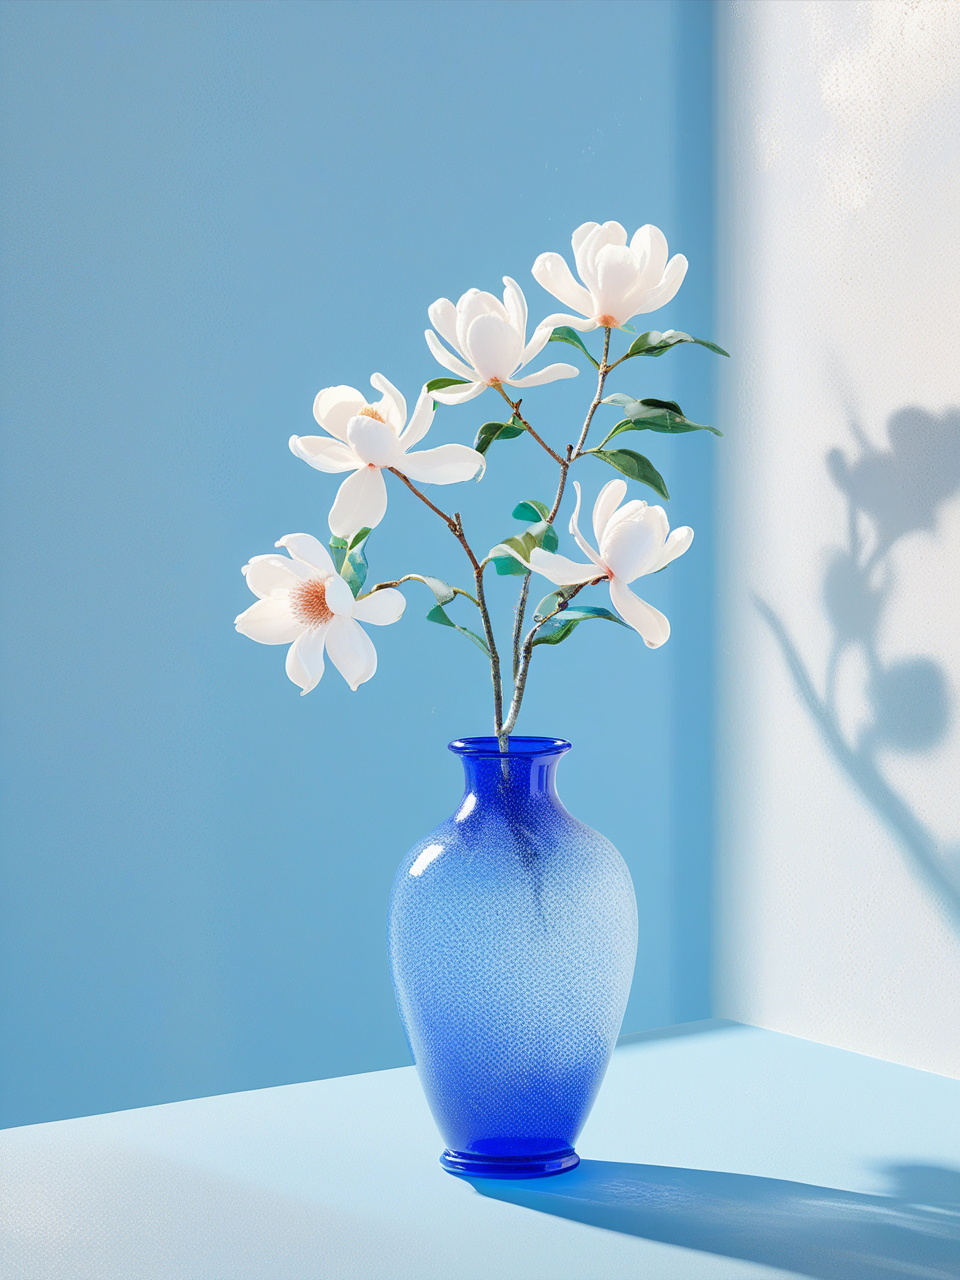 3D极简蓝色透明花瓶白玉兰鲜花广告摄影海报奇域ai绘画关键词咒语 - Ai宇宙吧--Ai宇宙吧-